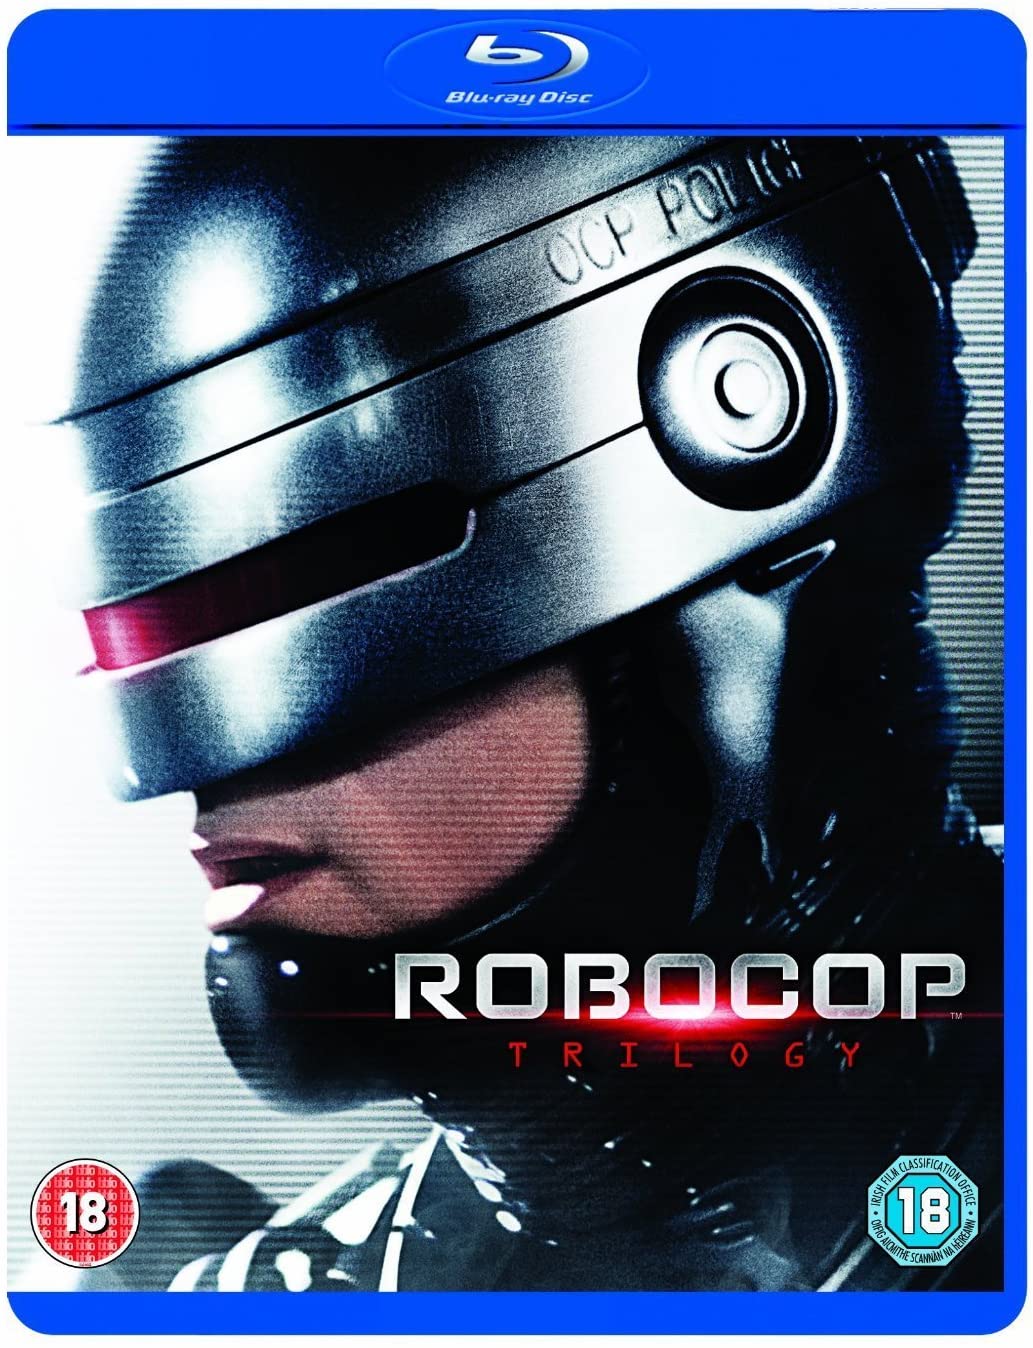 Robocop-Trilogie [Remastered] [Blu-ray] [Region Free]